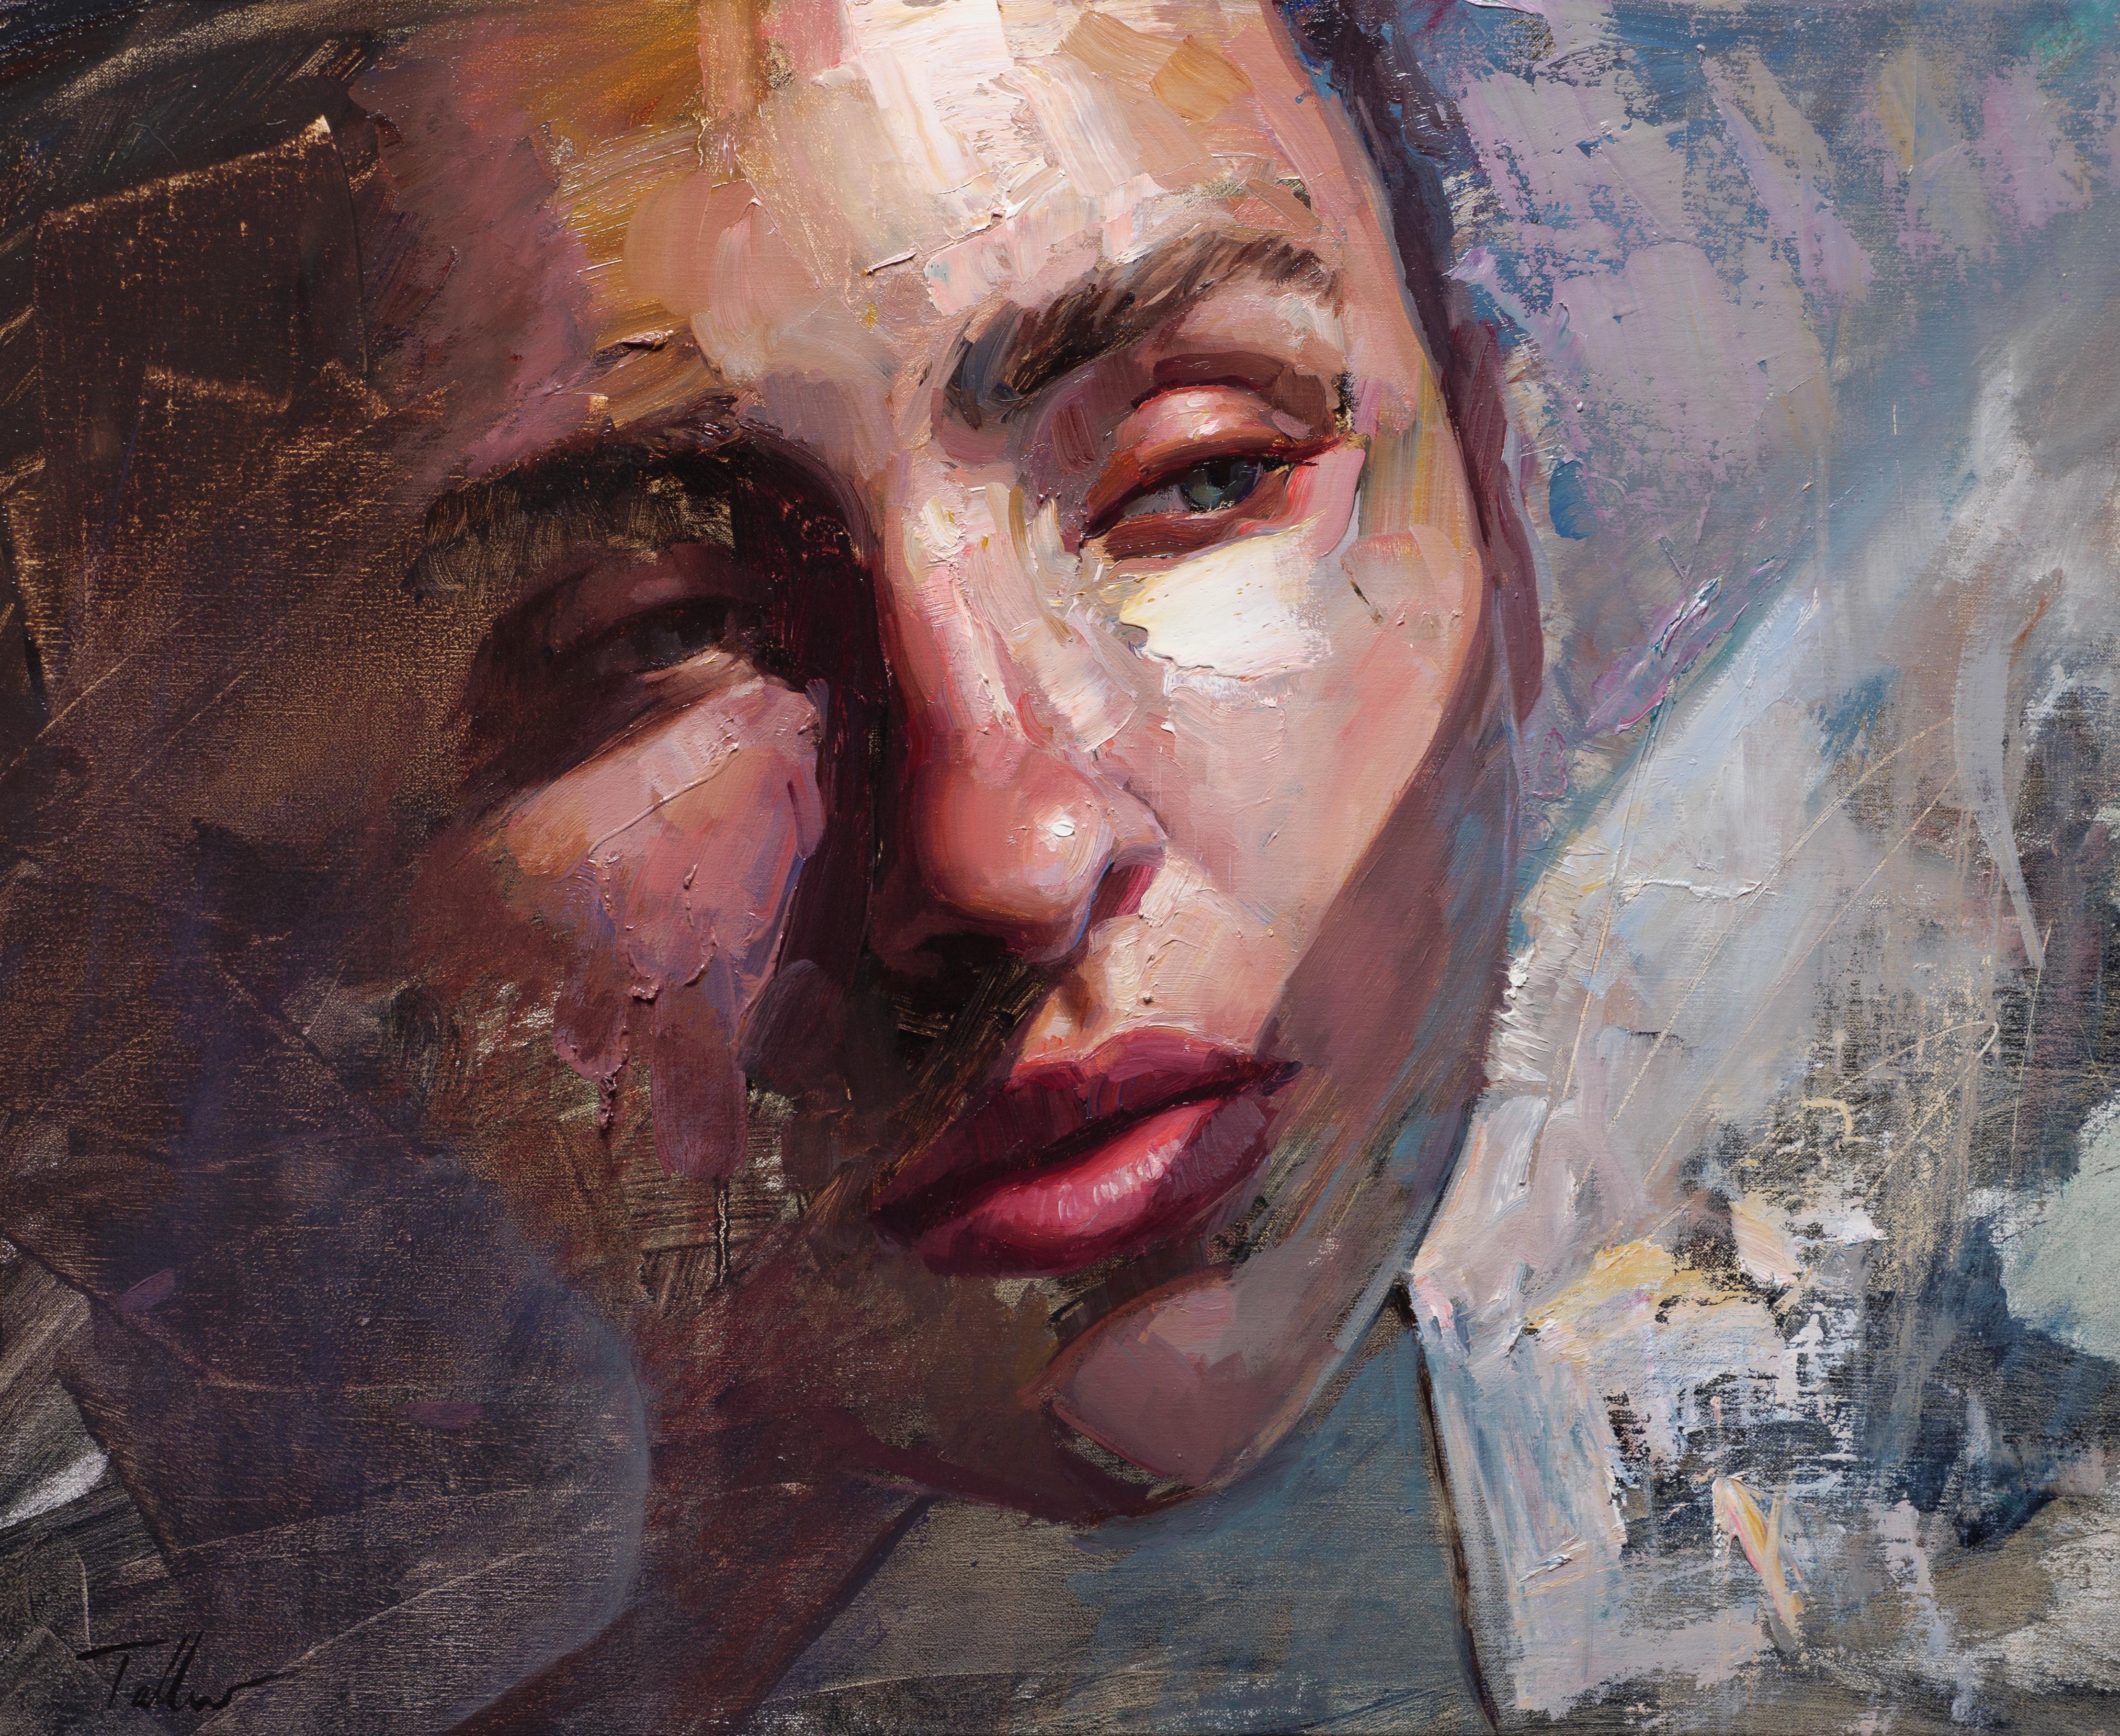 Matt Talbert Portrait Painting - "Daybreak" Original Oil Painting